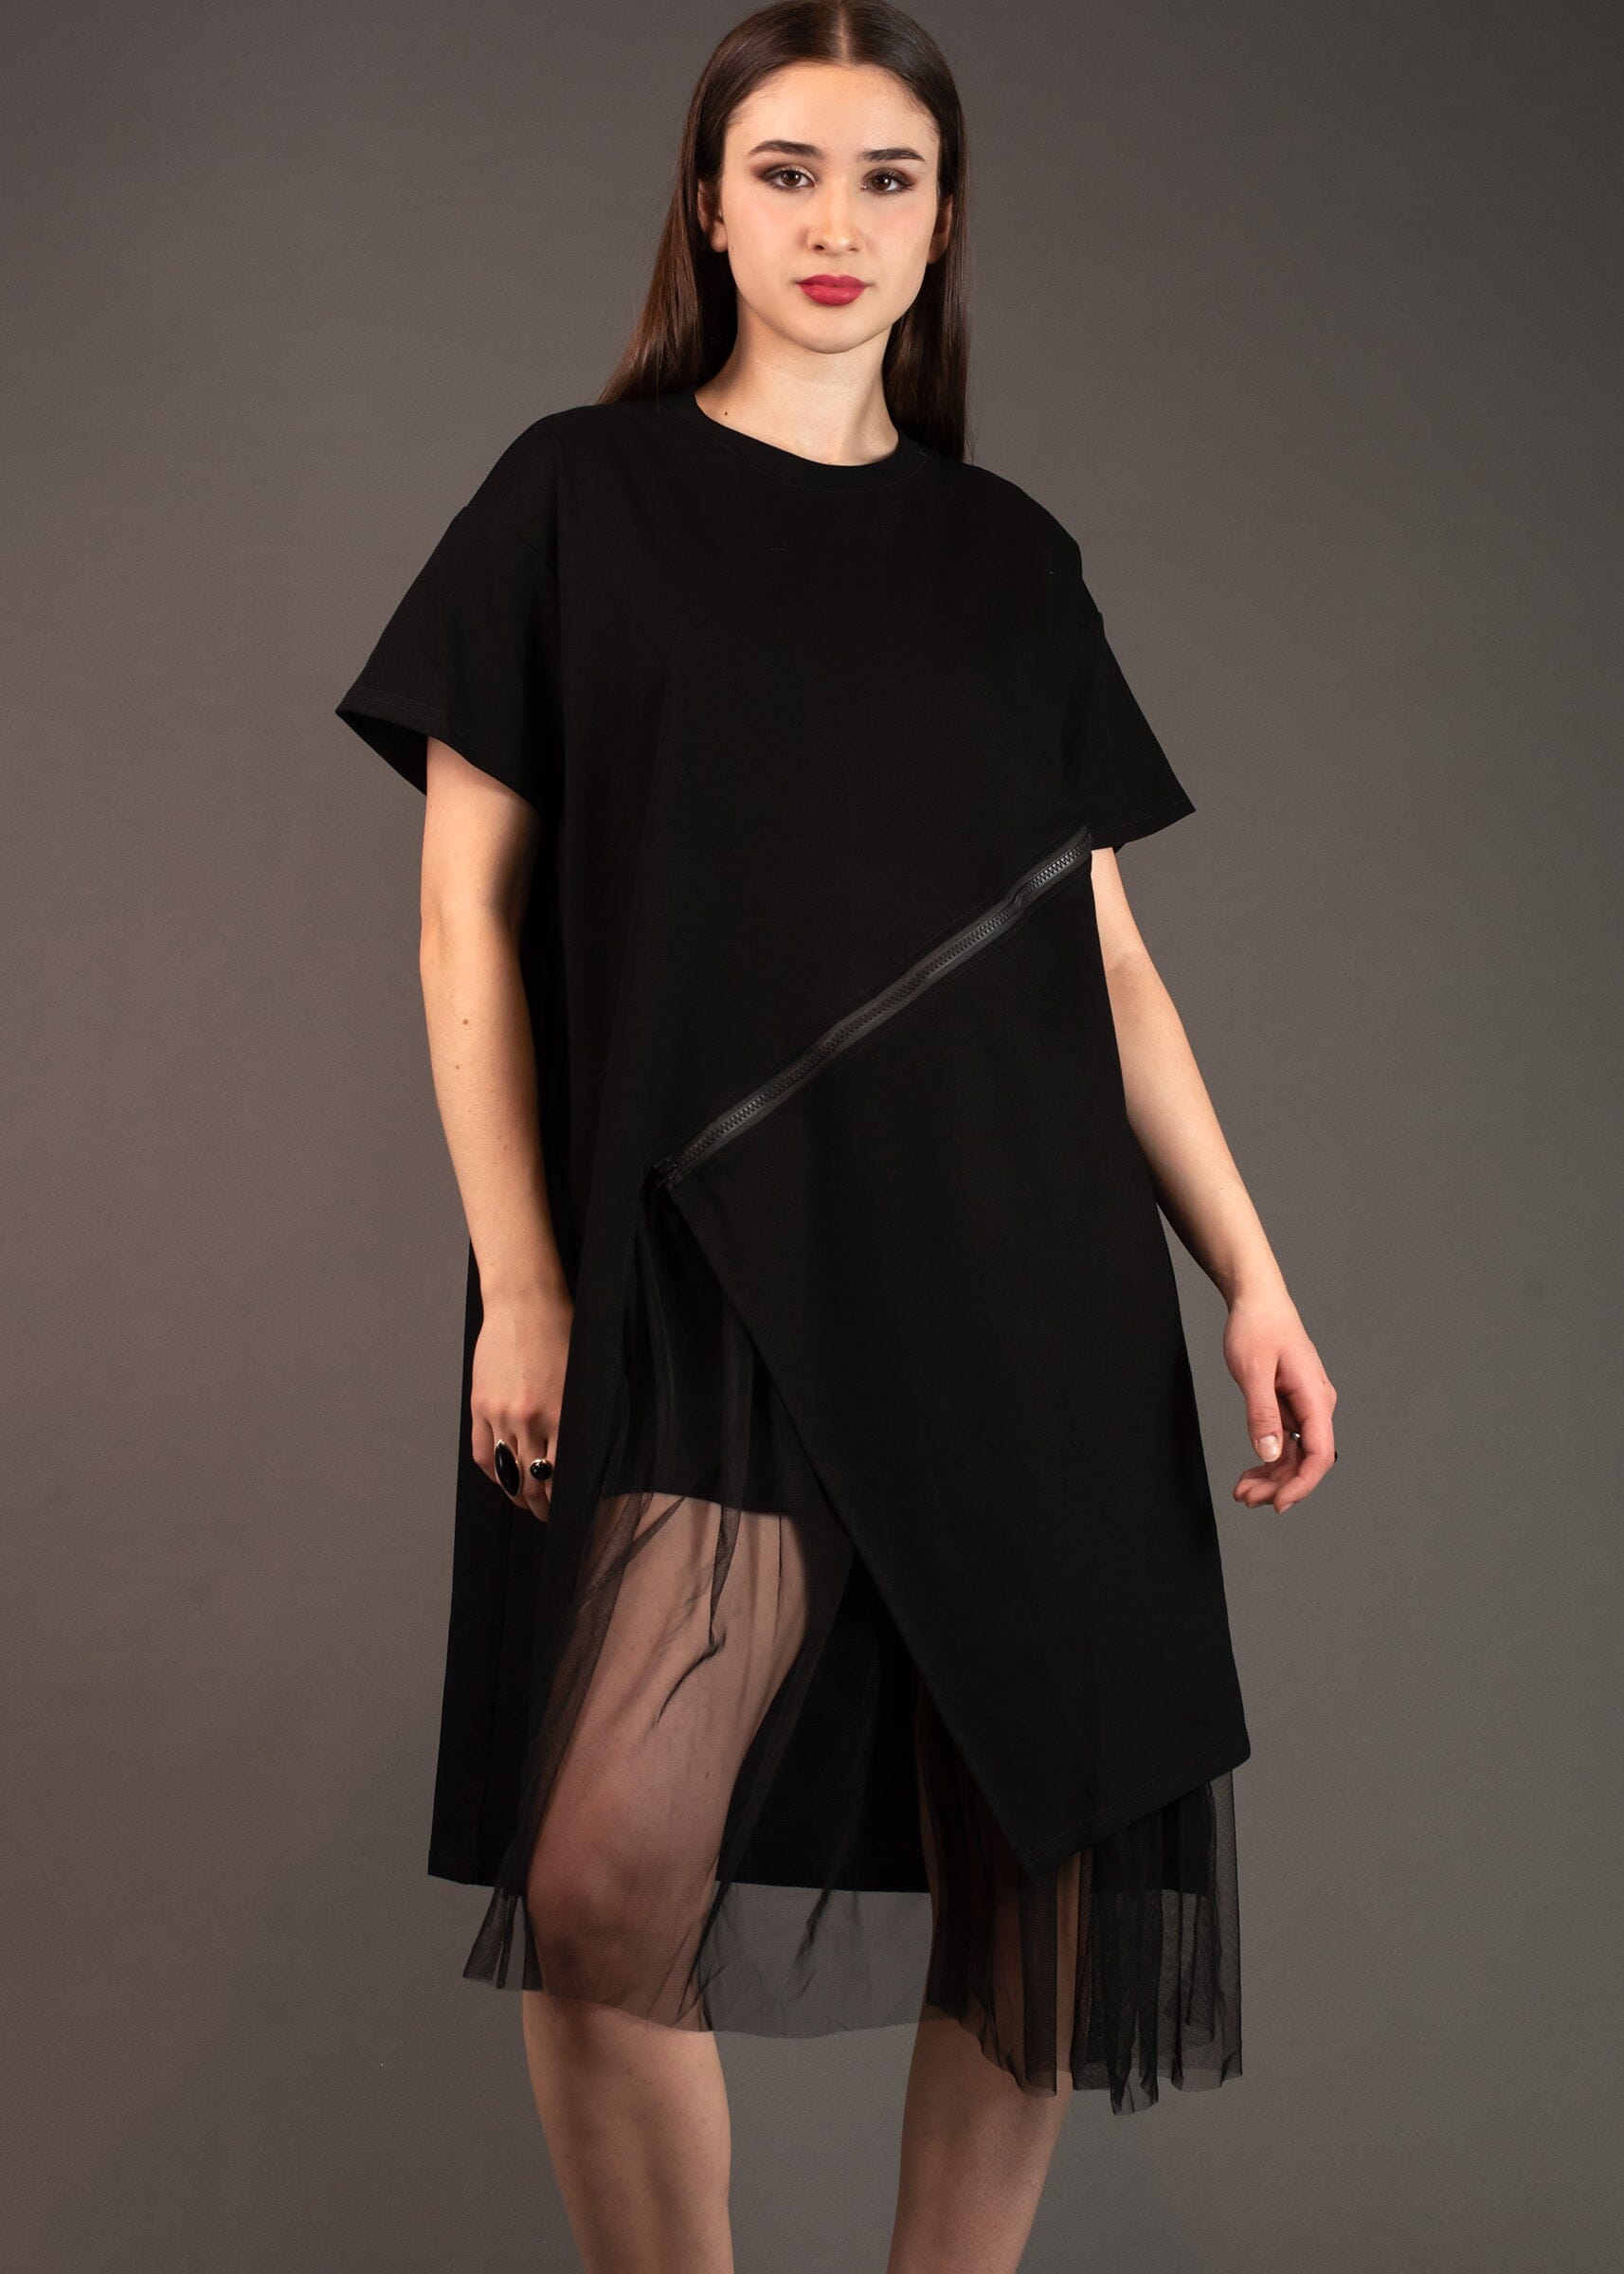 Zipper + Tulle Tee Dress Dresses Kate Hewko One Size Black 